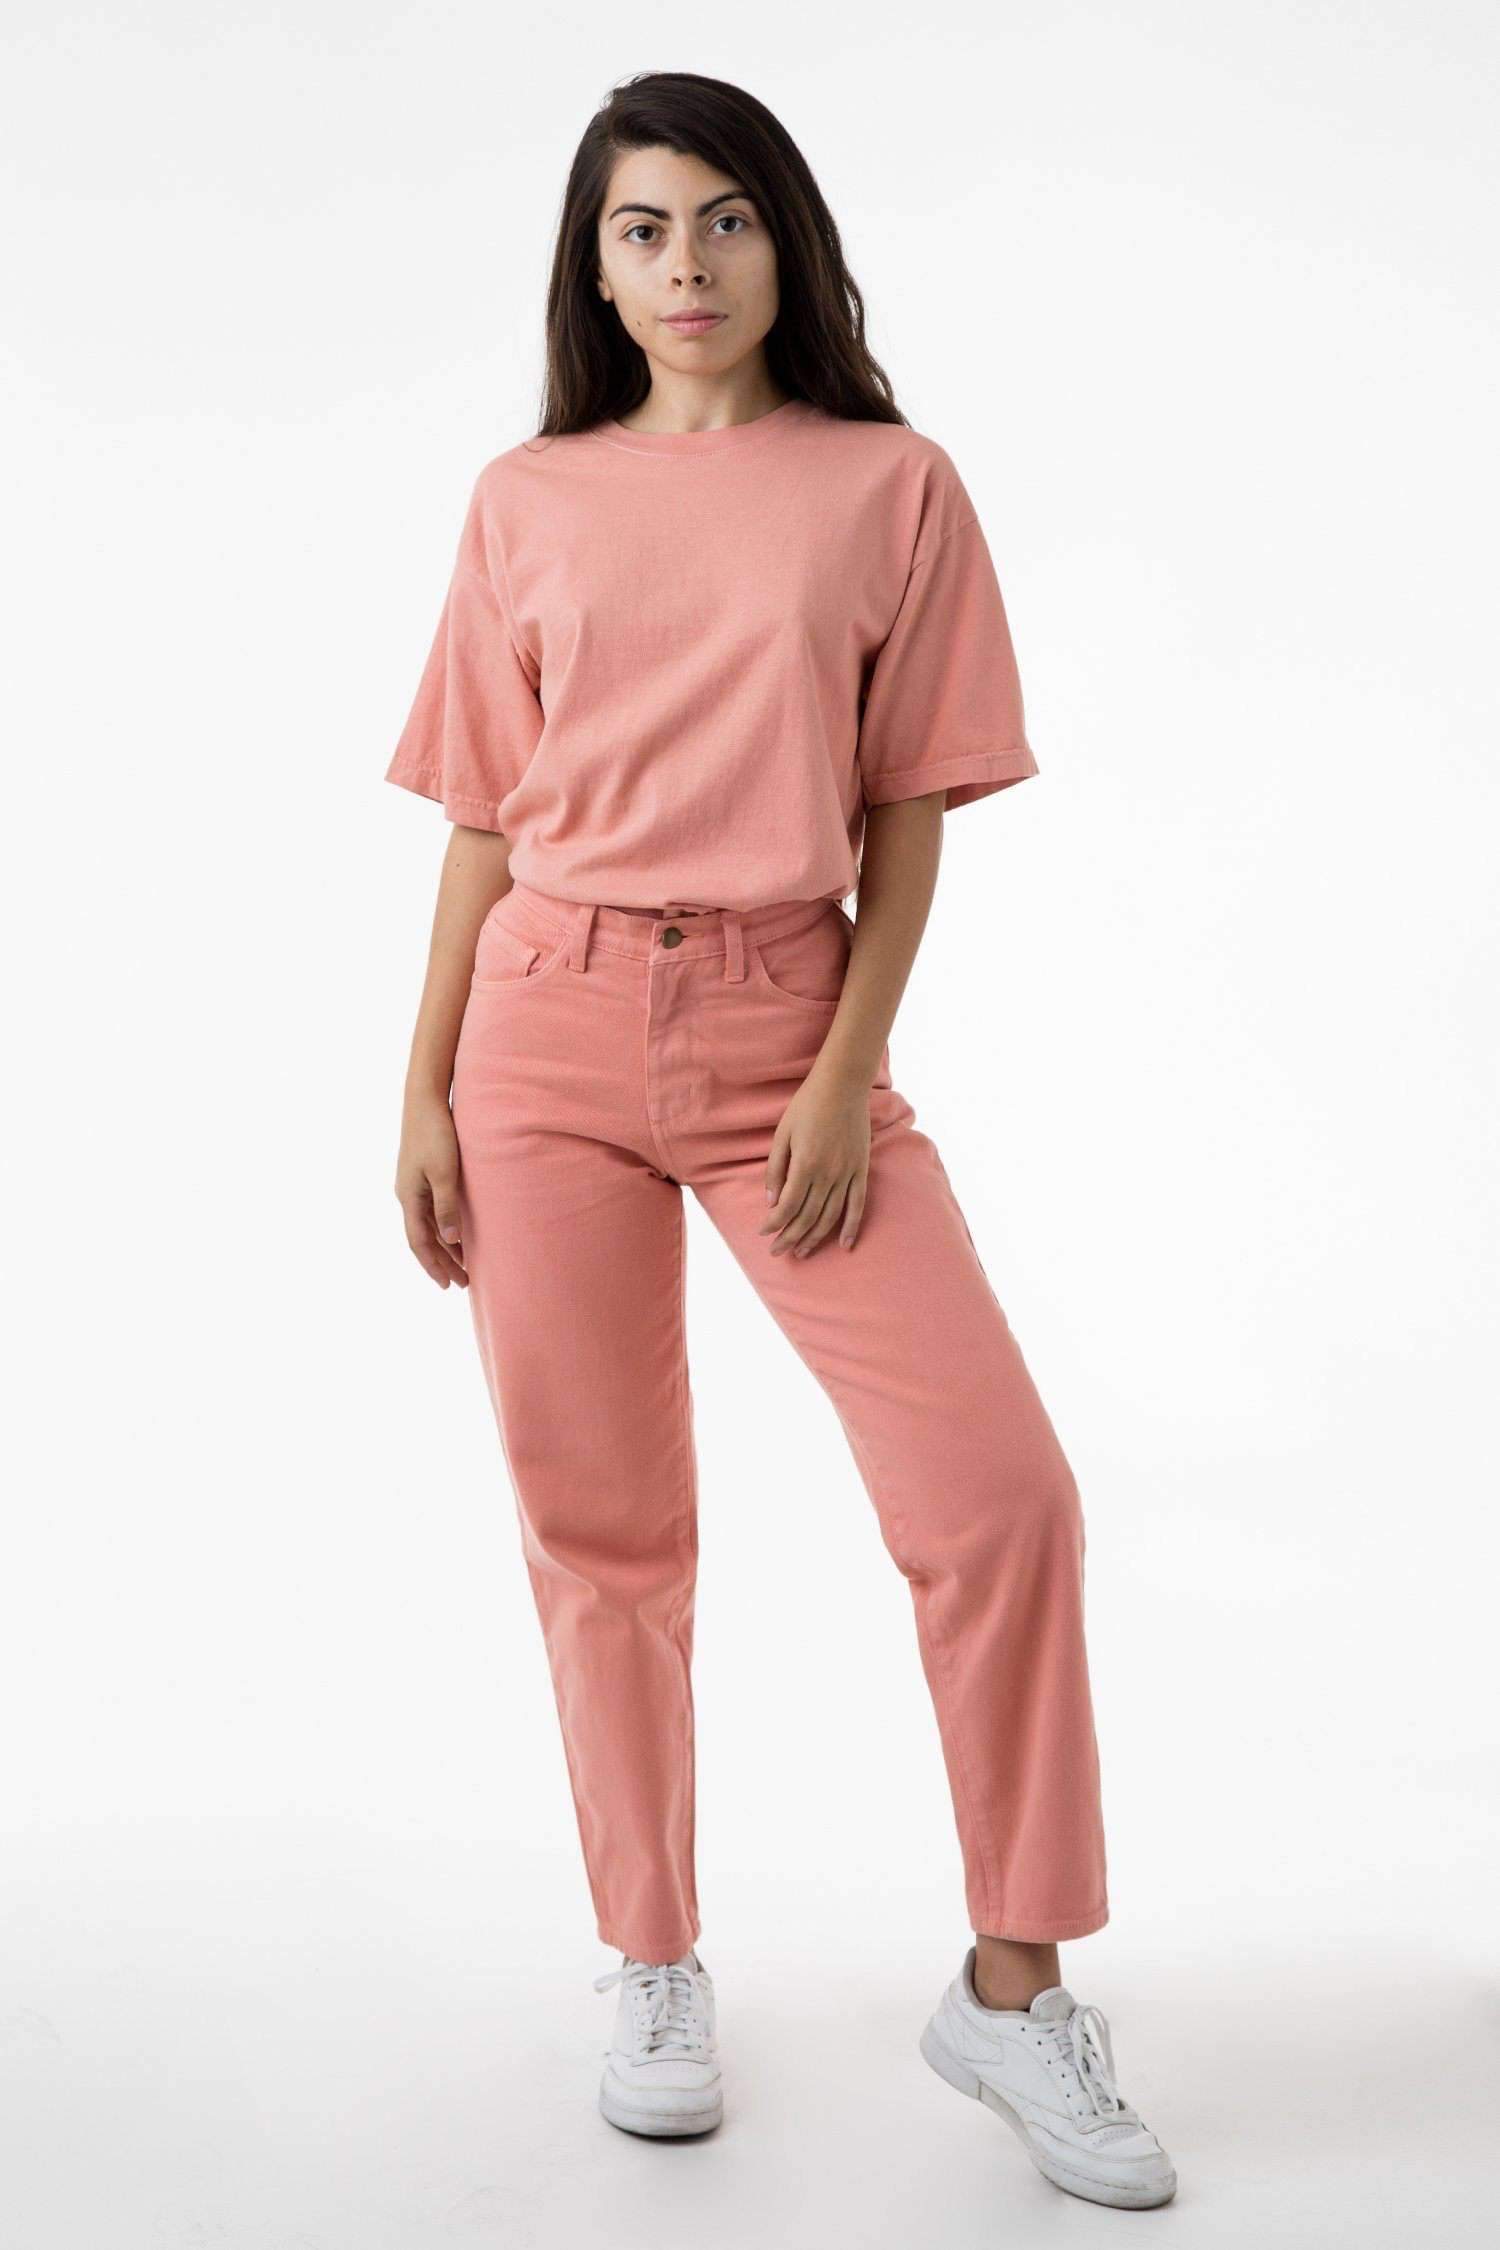 RBDW01GD - Garment Dye Women's Relaxed Fit Bull Denim Jean Jeans Los Angeles Apparel Coral 25/28 